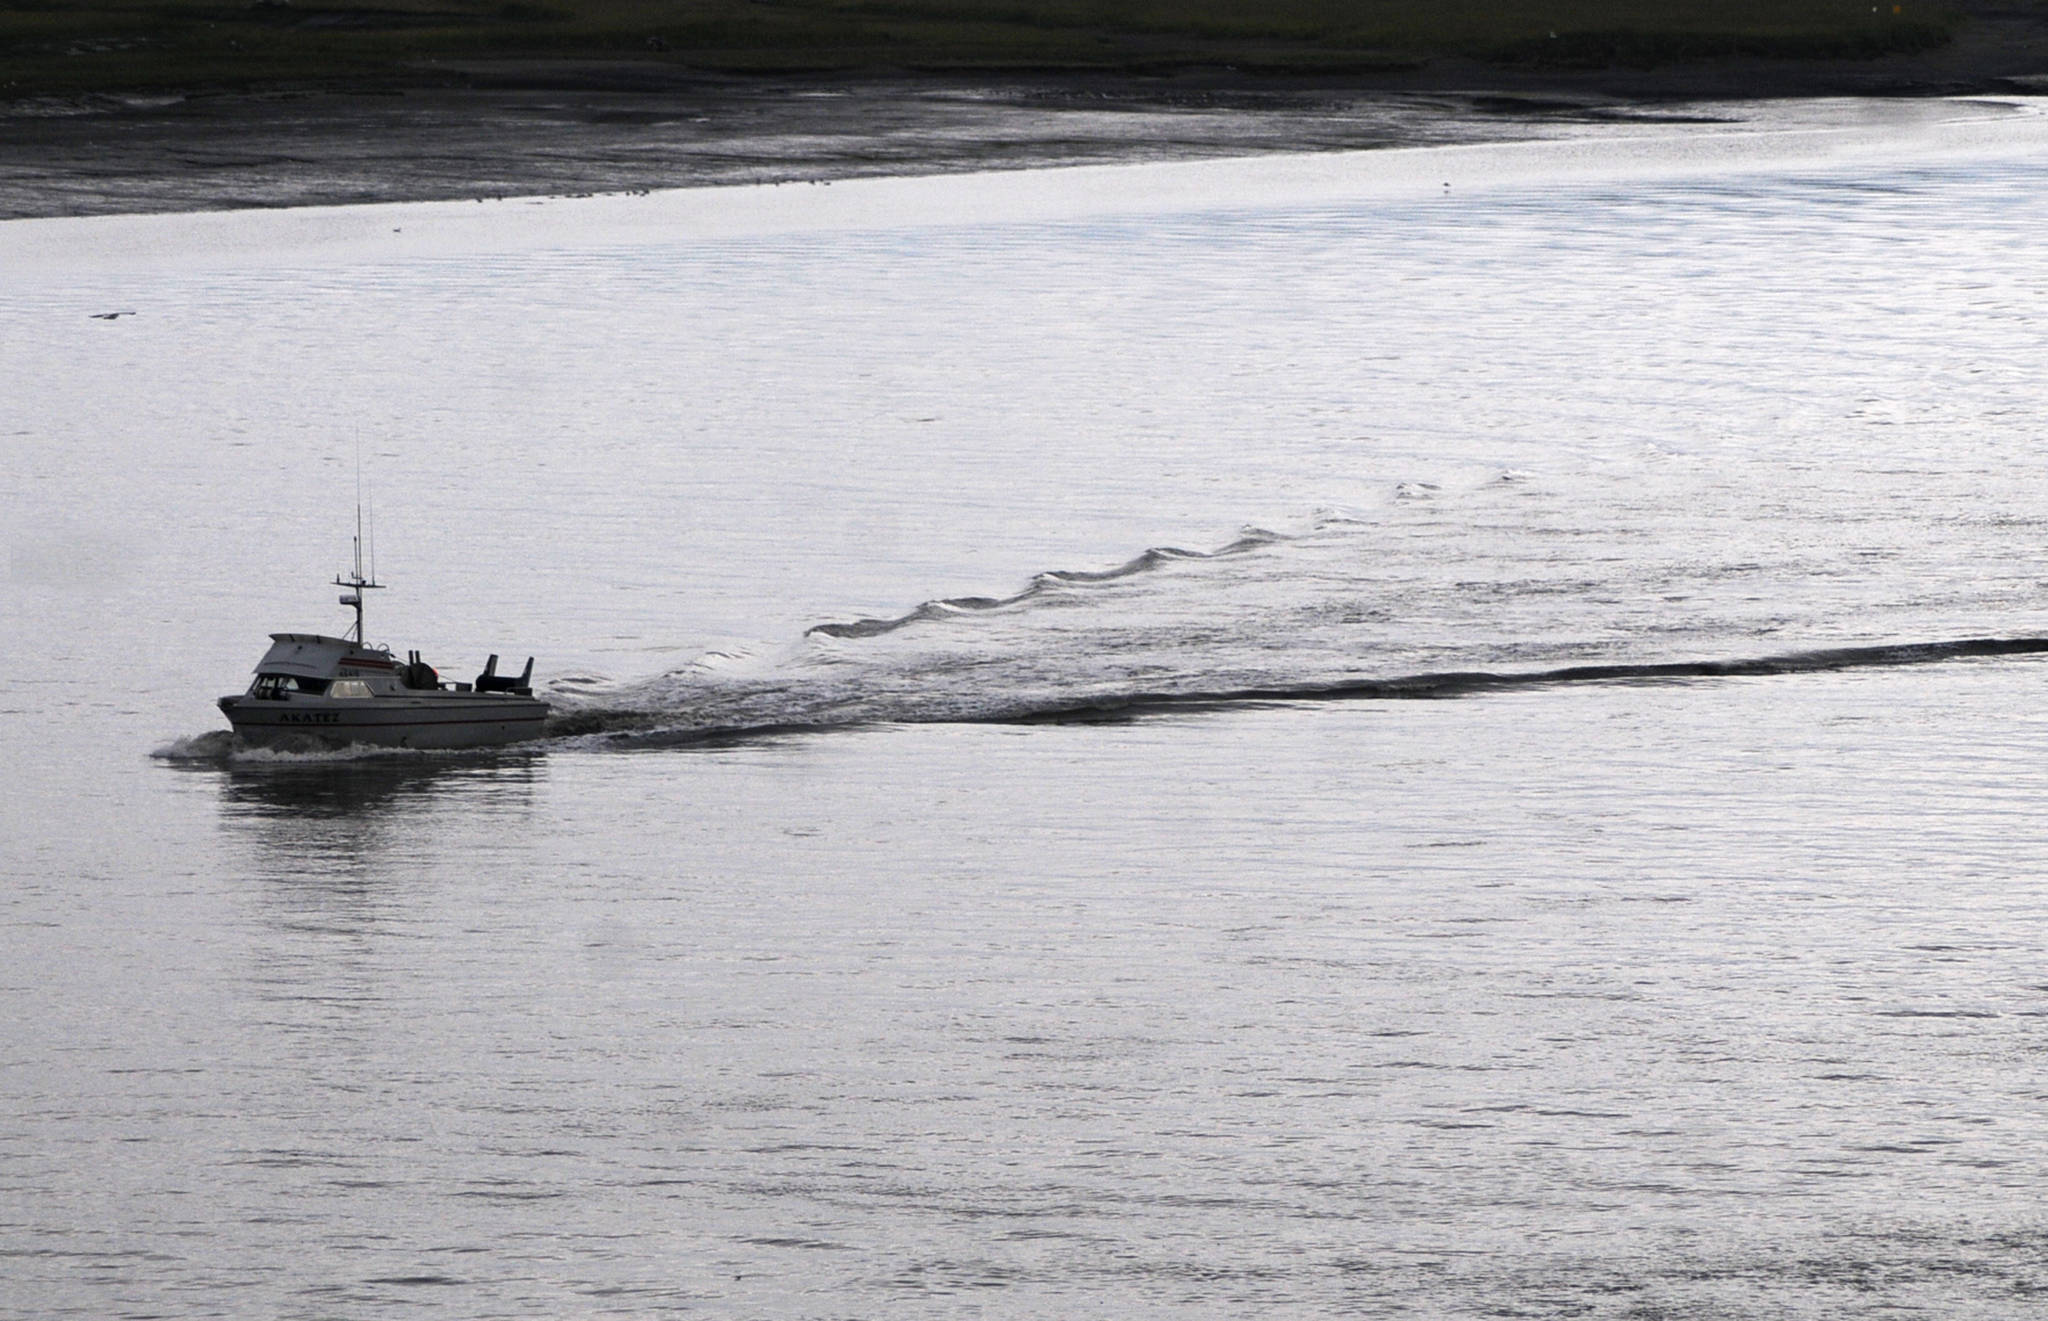 A drift gillnet fishing vessel makes its way into the Kenai River on Friday in Kenai. (Photo by Elizabeth Earl/Peninsula Clarion)